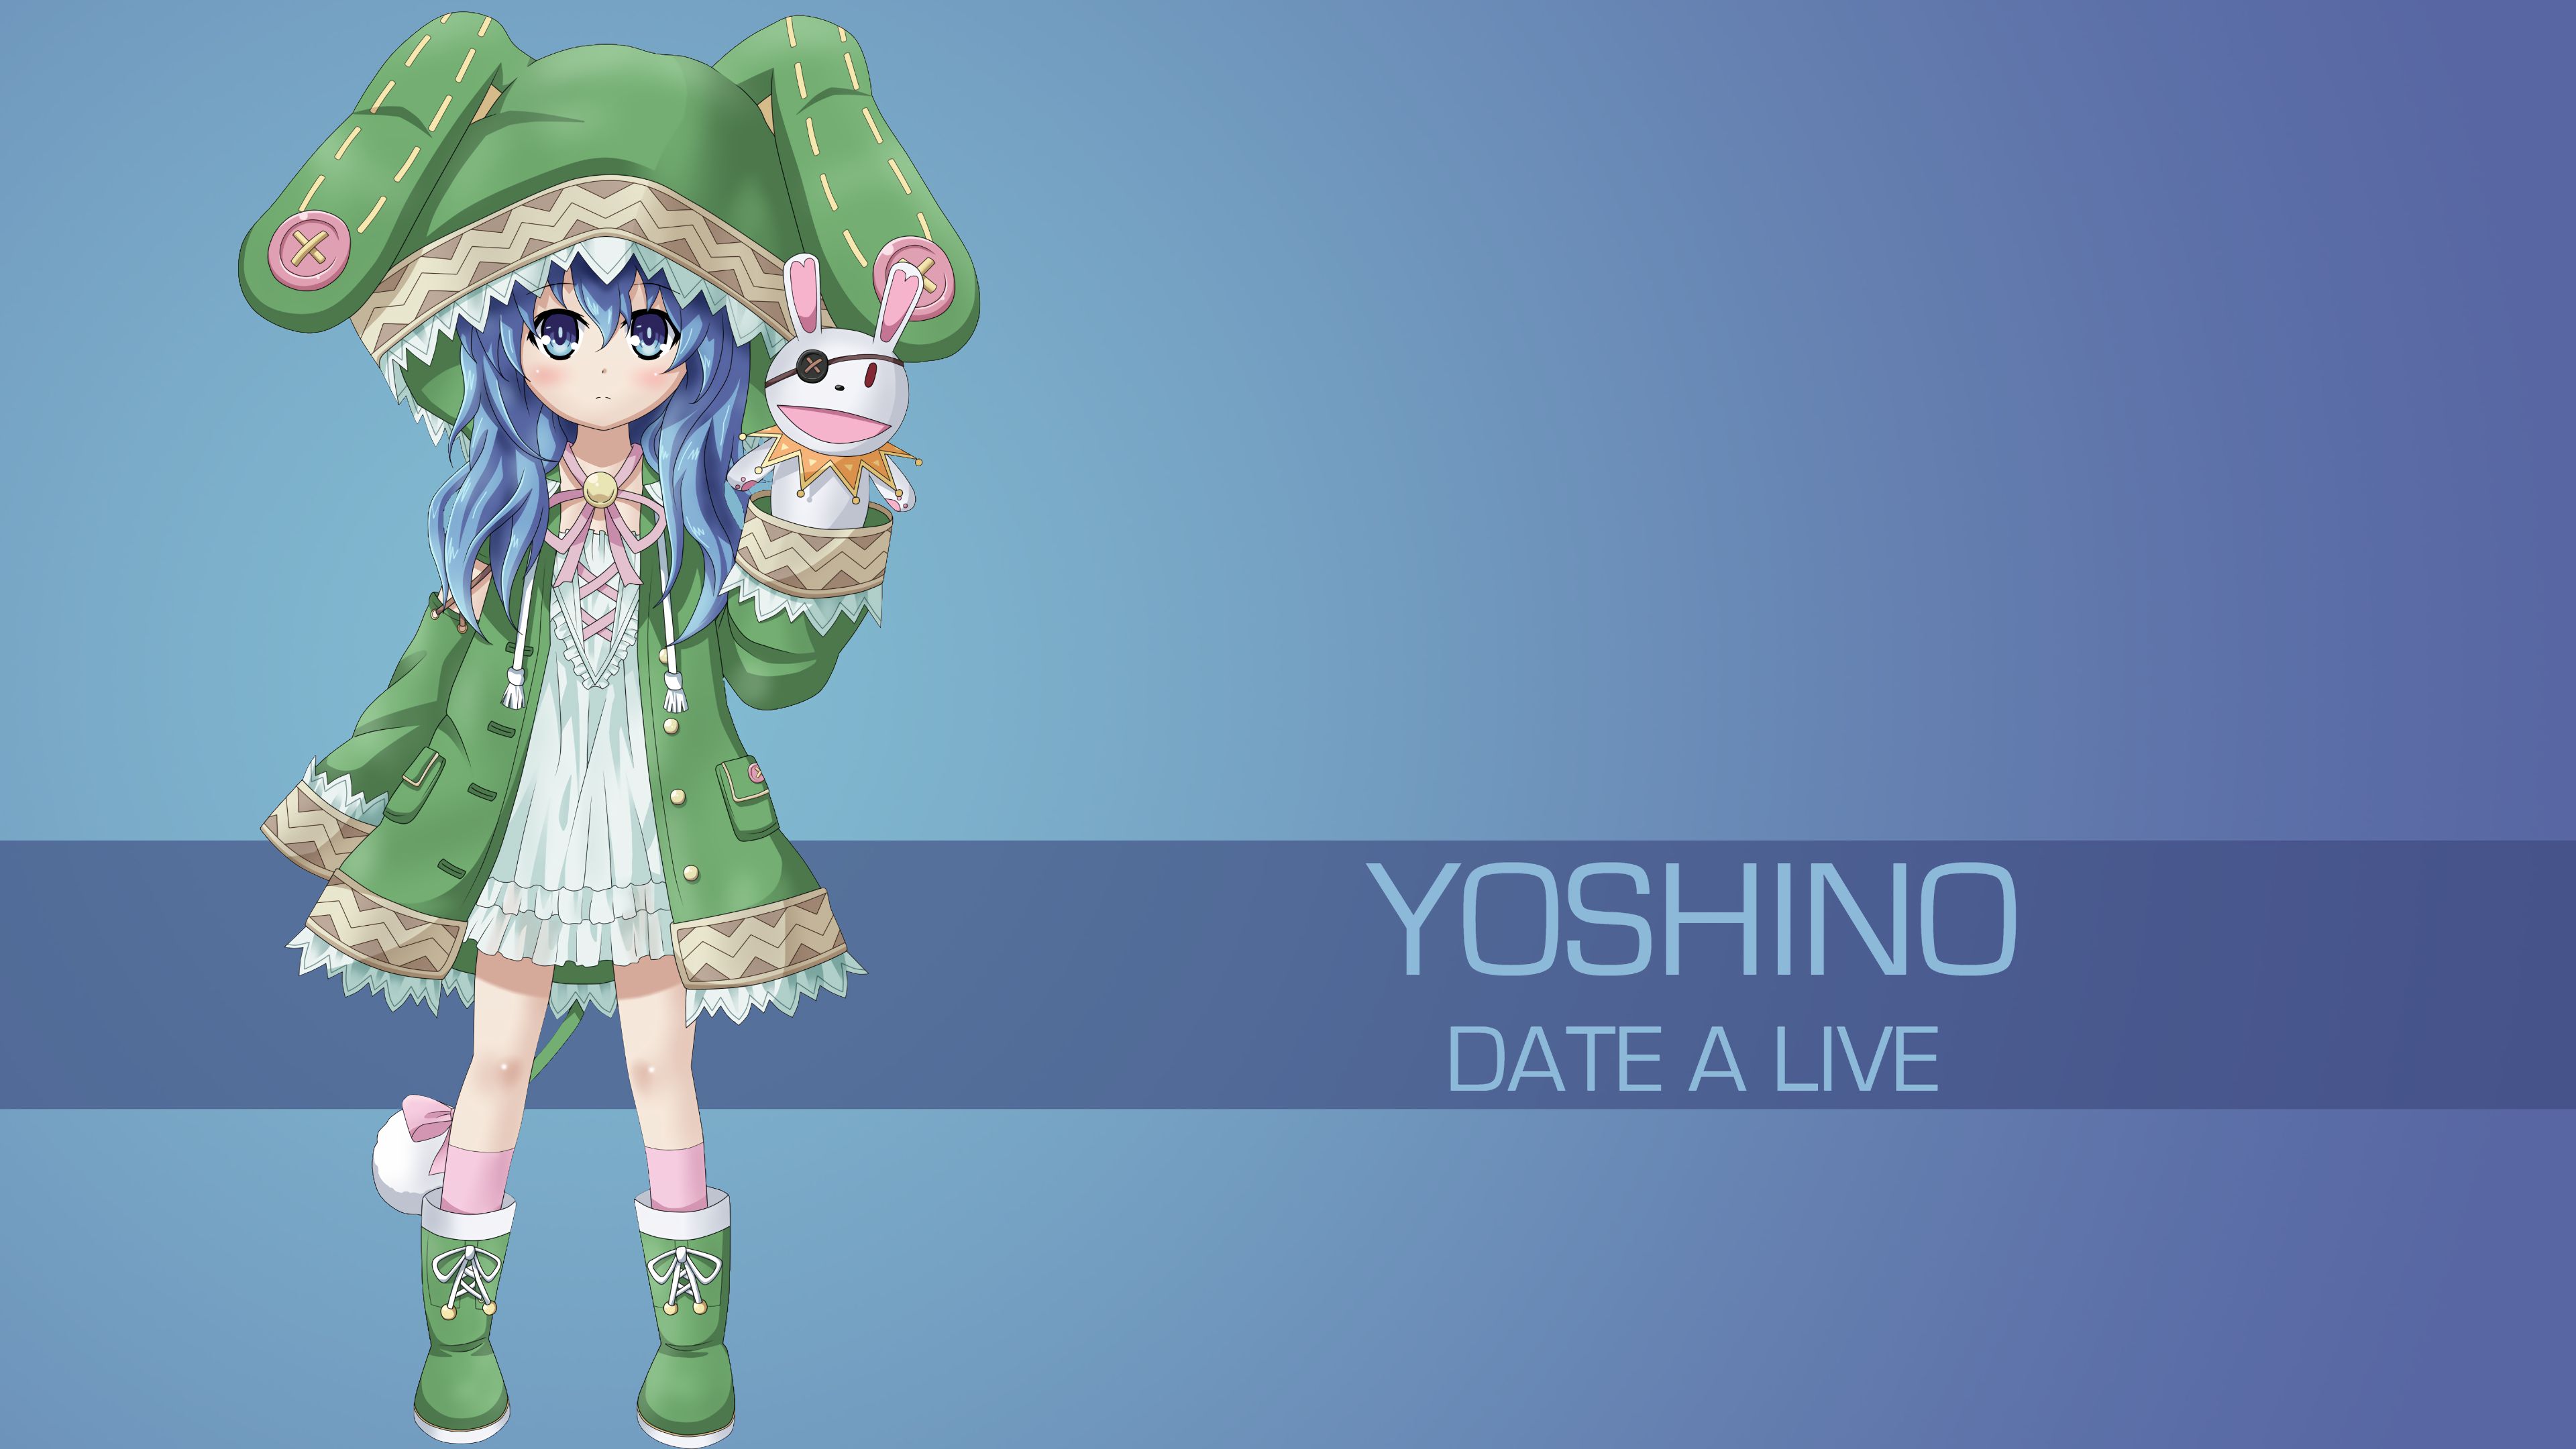 778075 descargar imagen animado, fecha un vivo, yoshino (date a live): fondos de pantalla y protectores de pantalla gratis